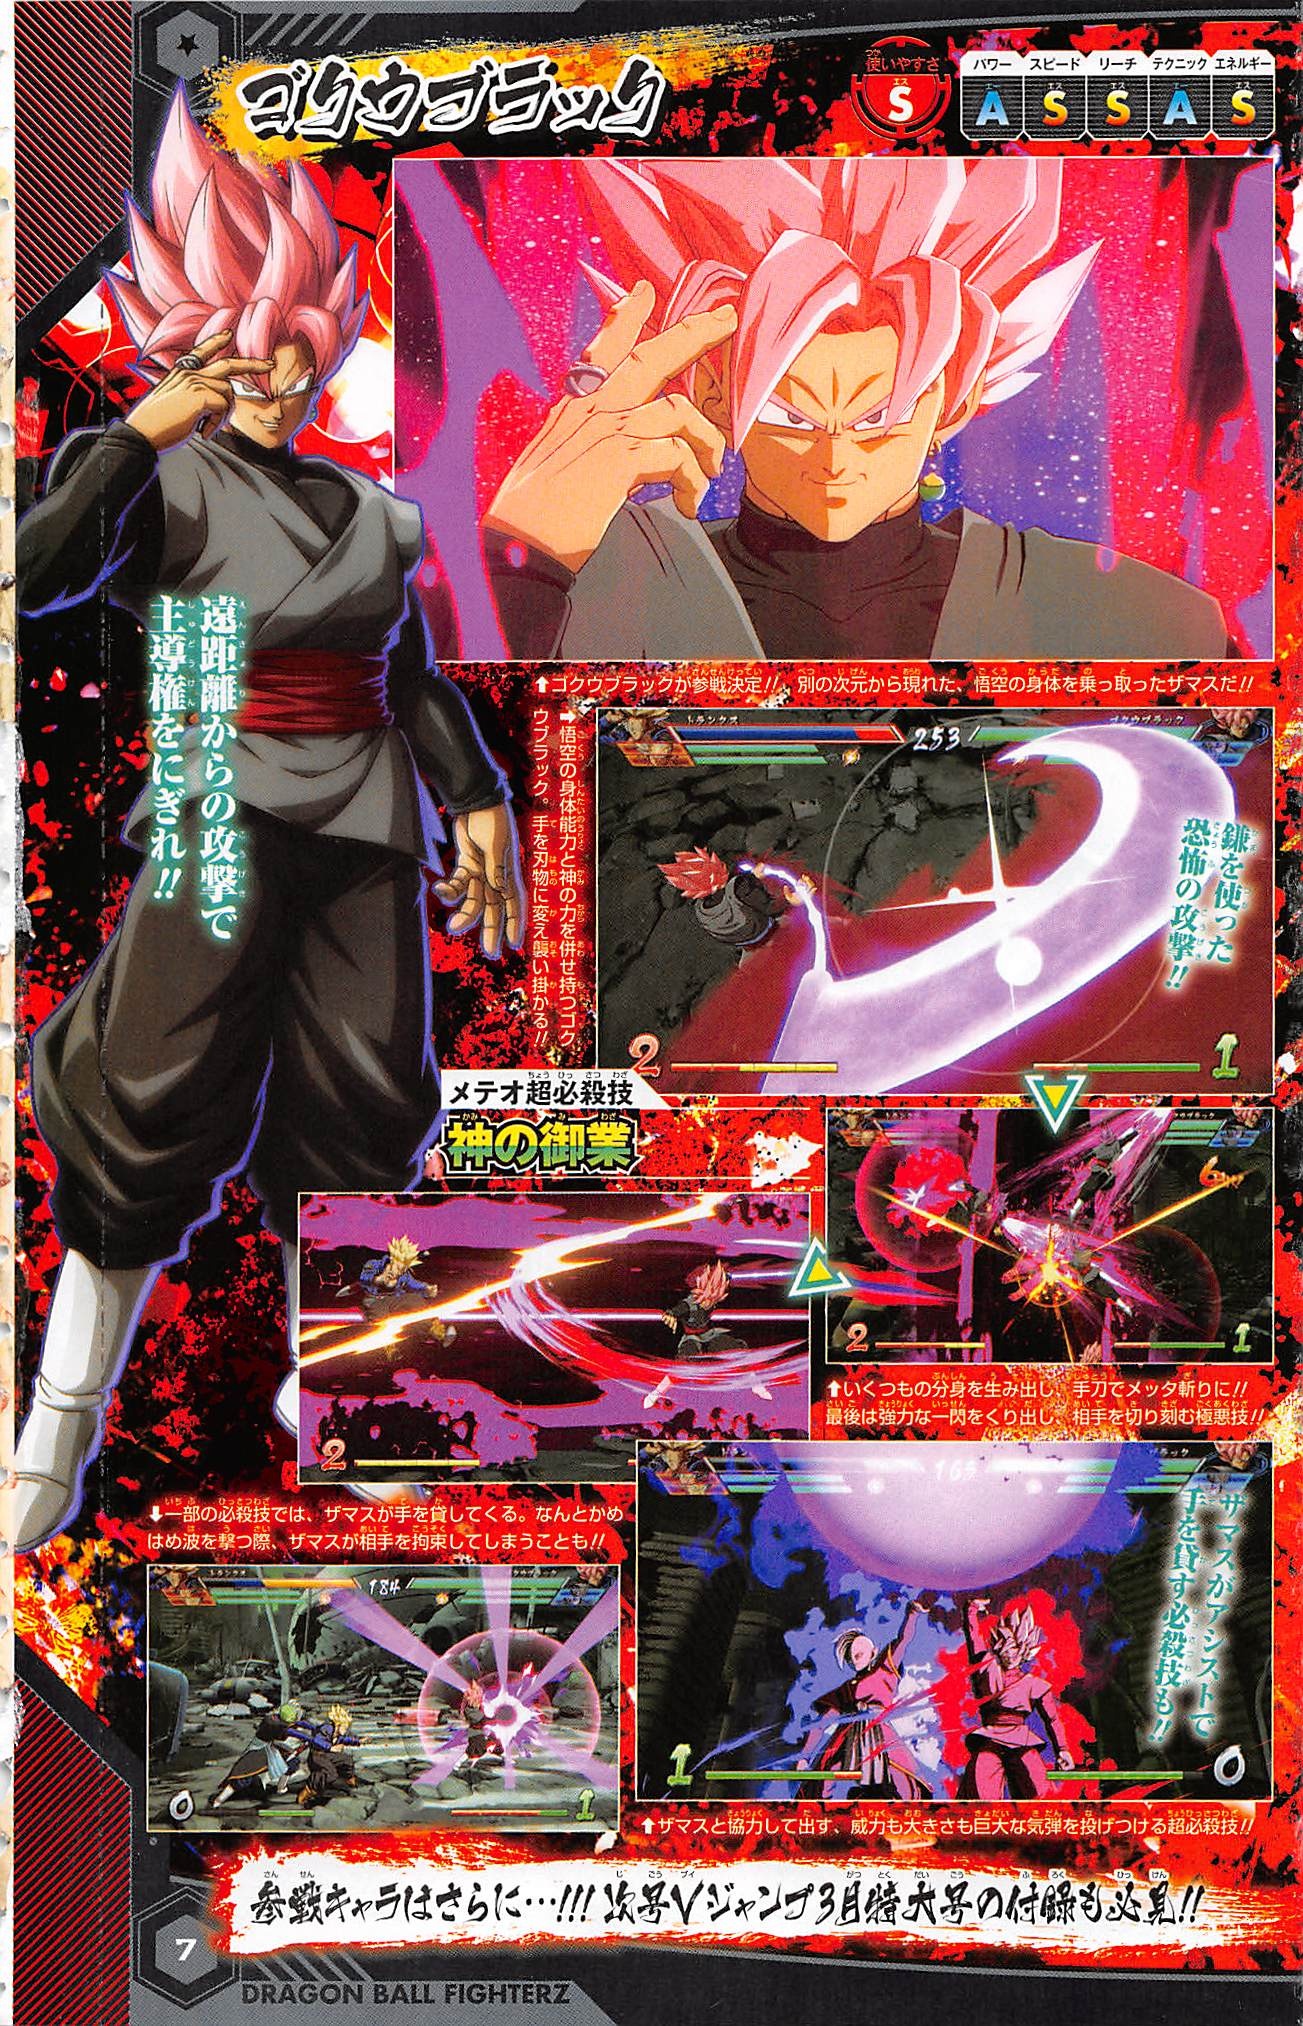 Goku Black from Dragon Ball FighterZ